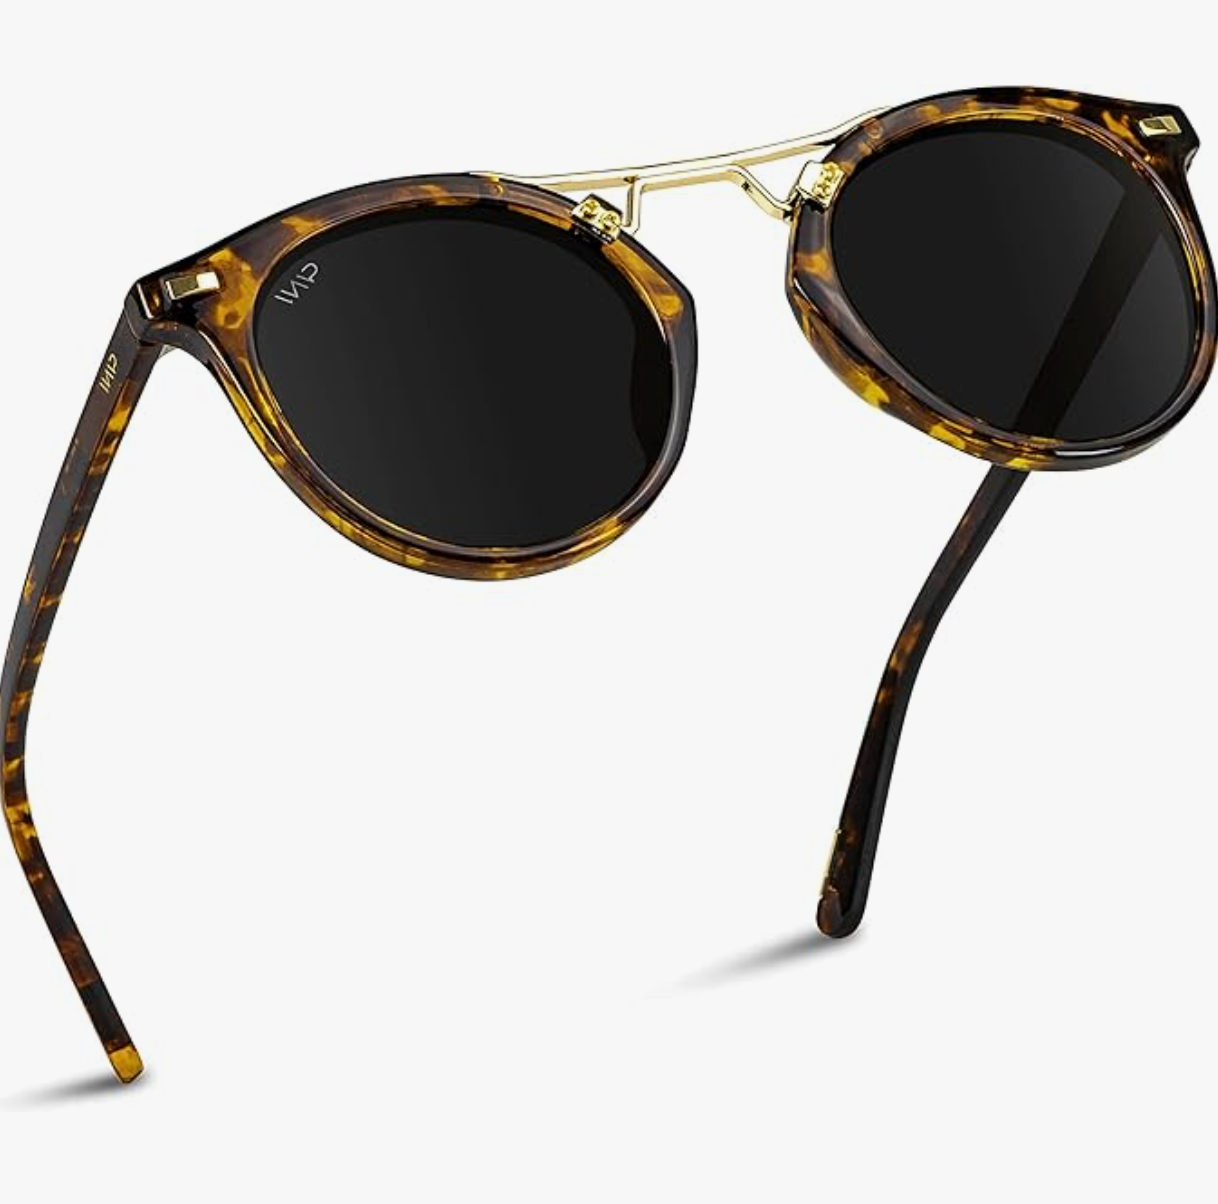 2024-01-03 - 22-55-56 - Amazon-com- WearMe Pro Polarized Round Retro Double-Bridge Vintage Women-s Sunglasses -Tortoise-Black Lens- - Clothing- Shoes - Jewelry.png